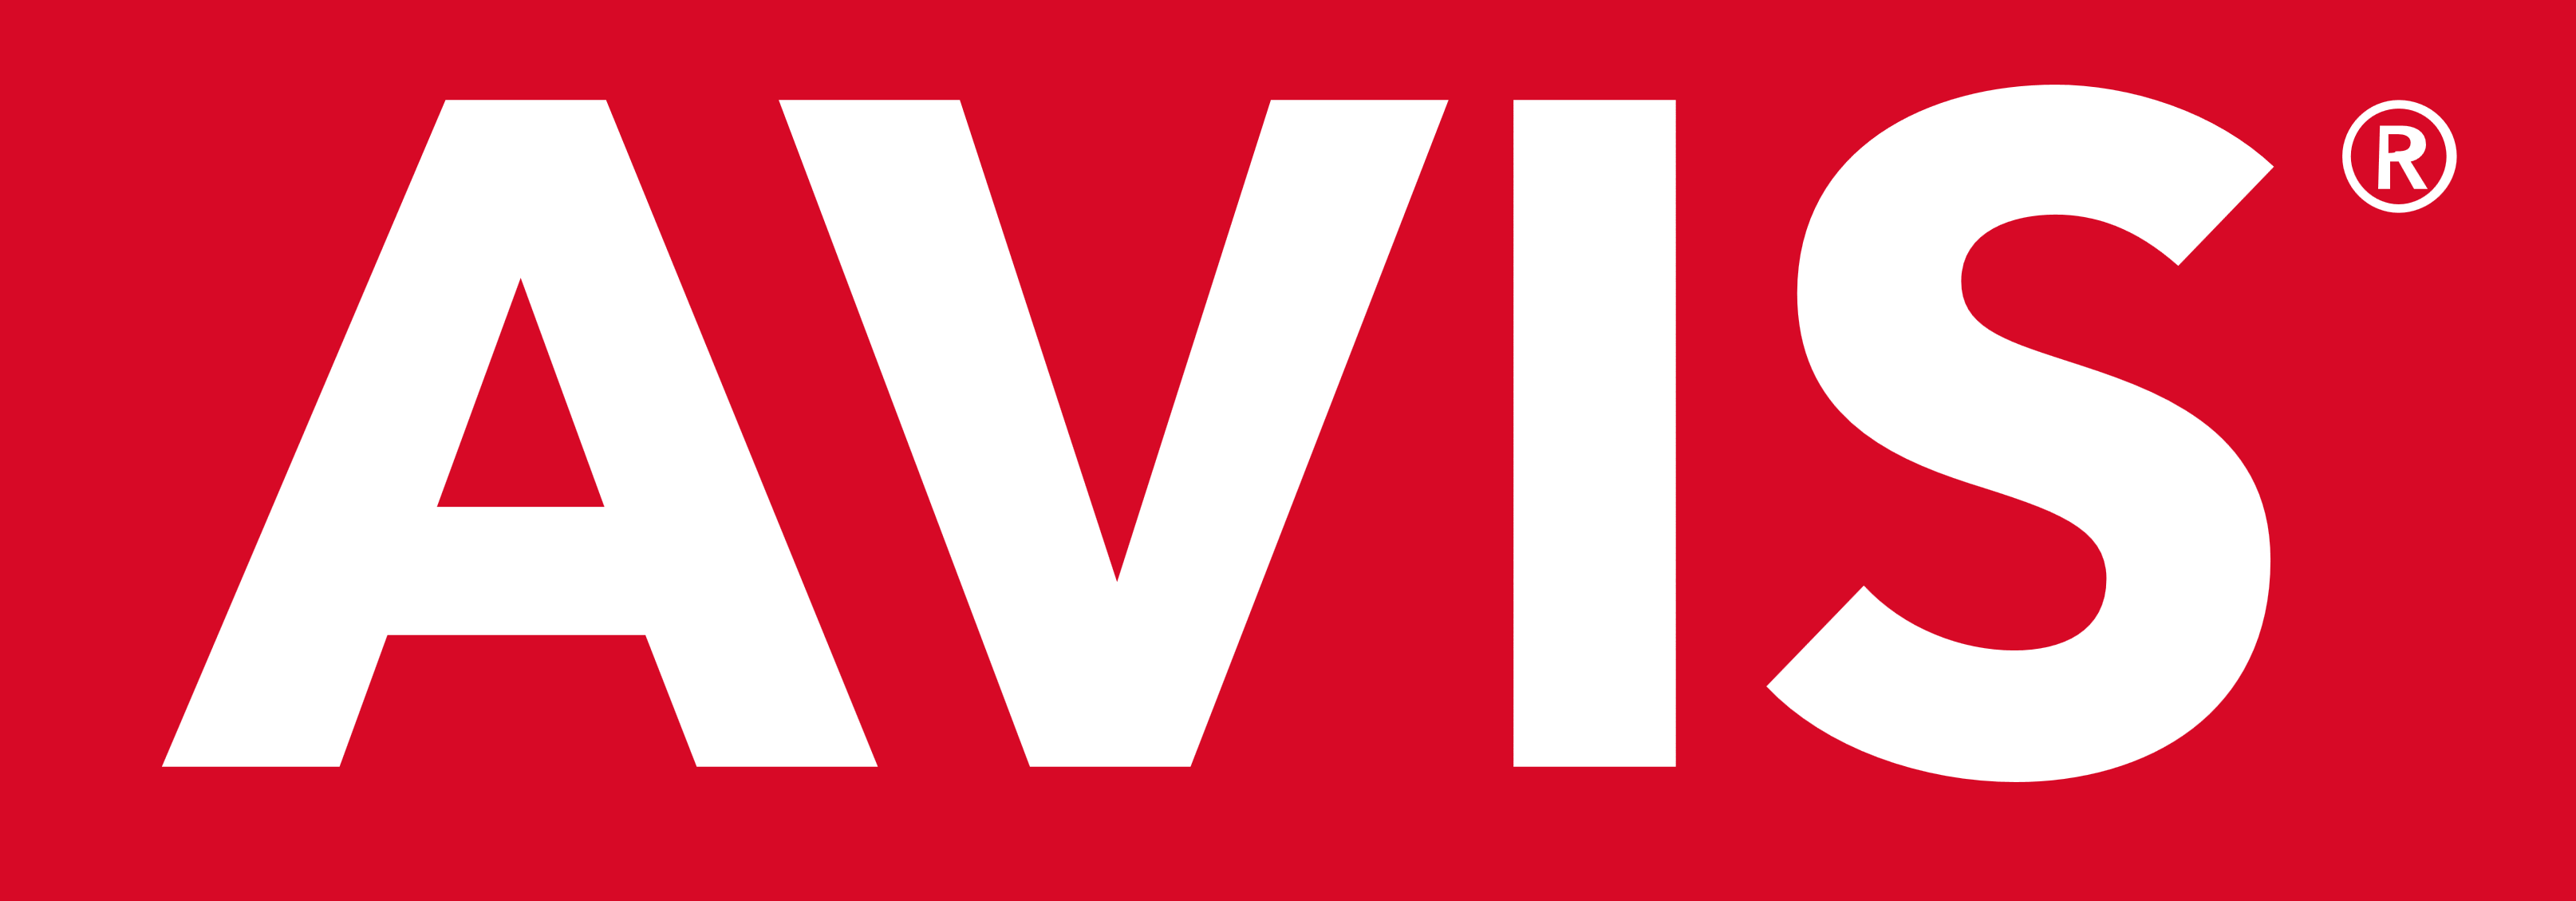 Avis Logo, Logotype - Avis, Transparent background PNG HD thumbnail